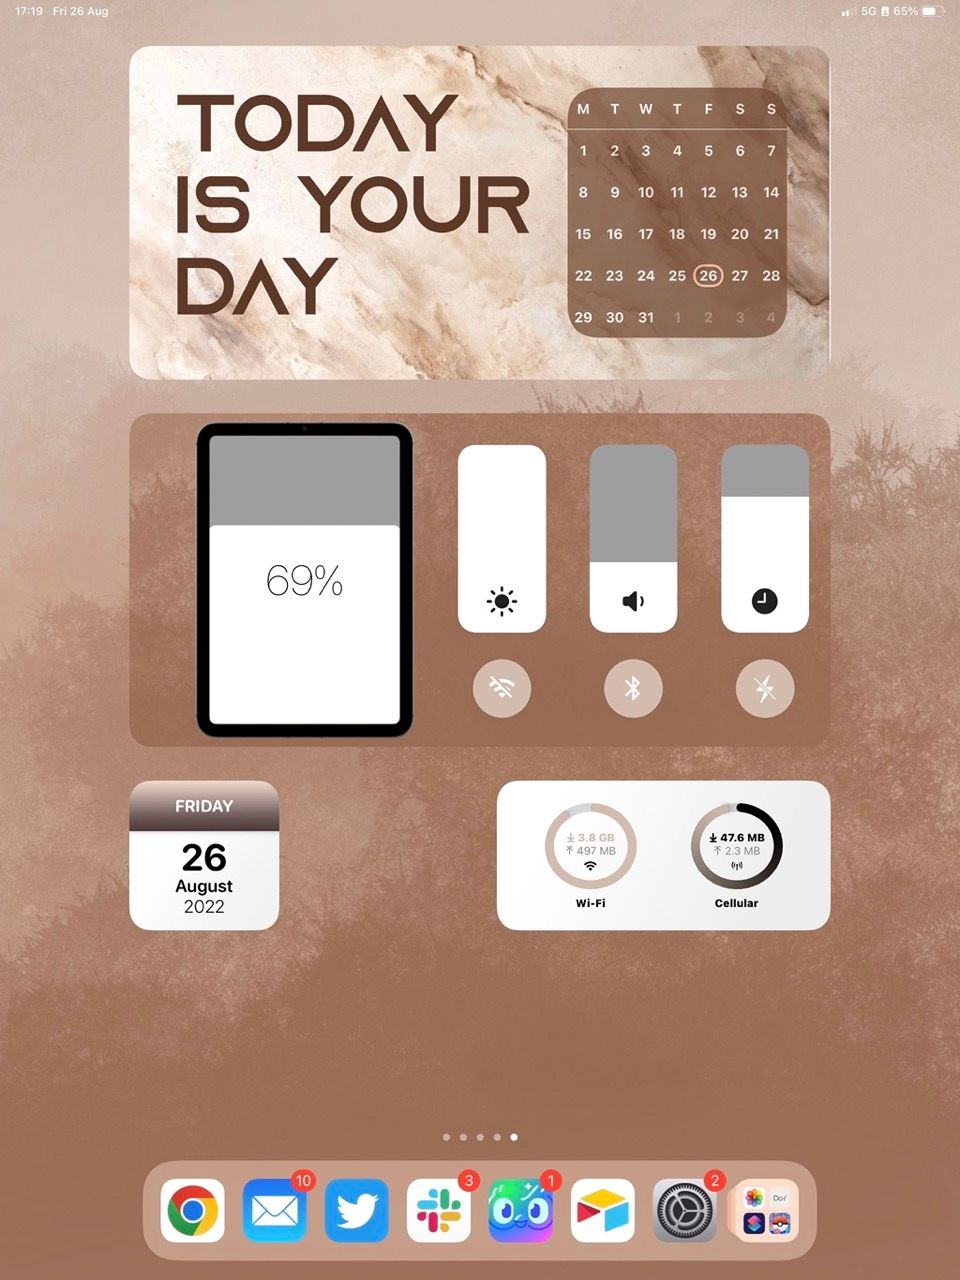 iPad home screen showing widgets made using the Widgy App